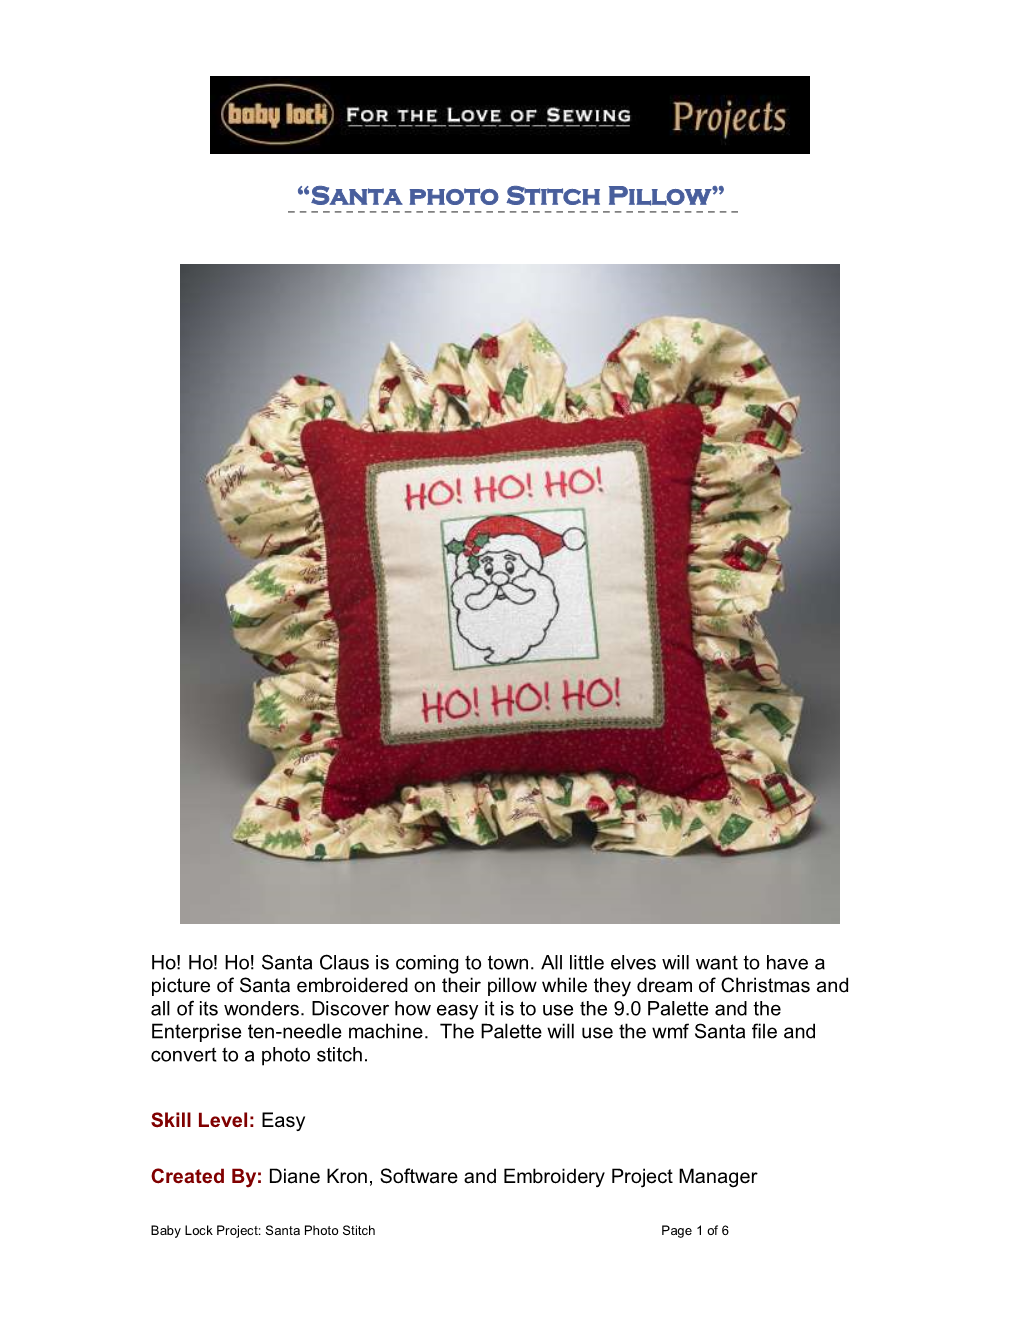 Santa Photo Stitch Pillow”